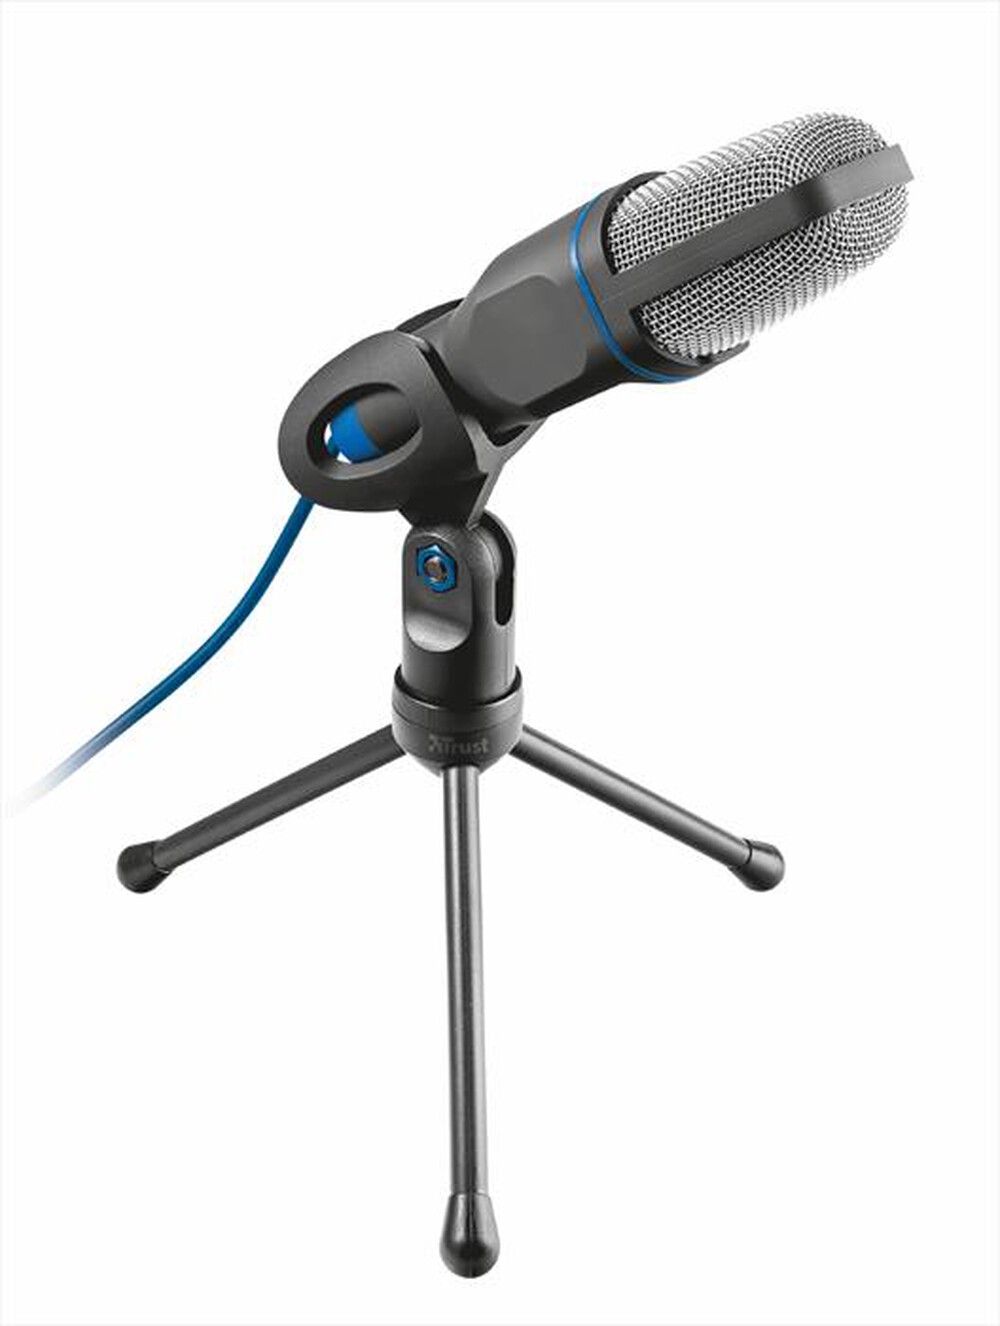 "TRUST - Mico USB Microphone 20378"